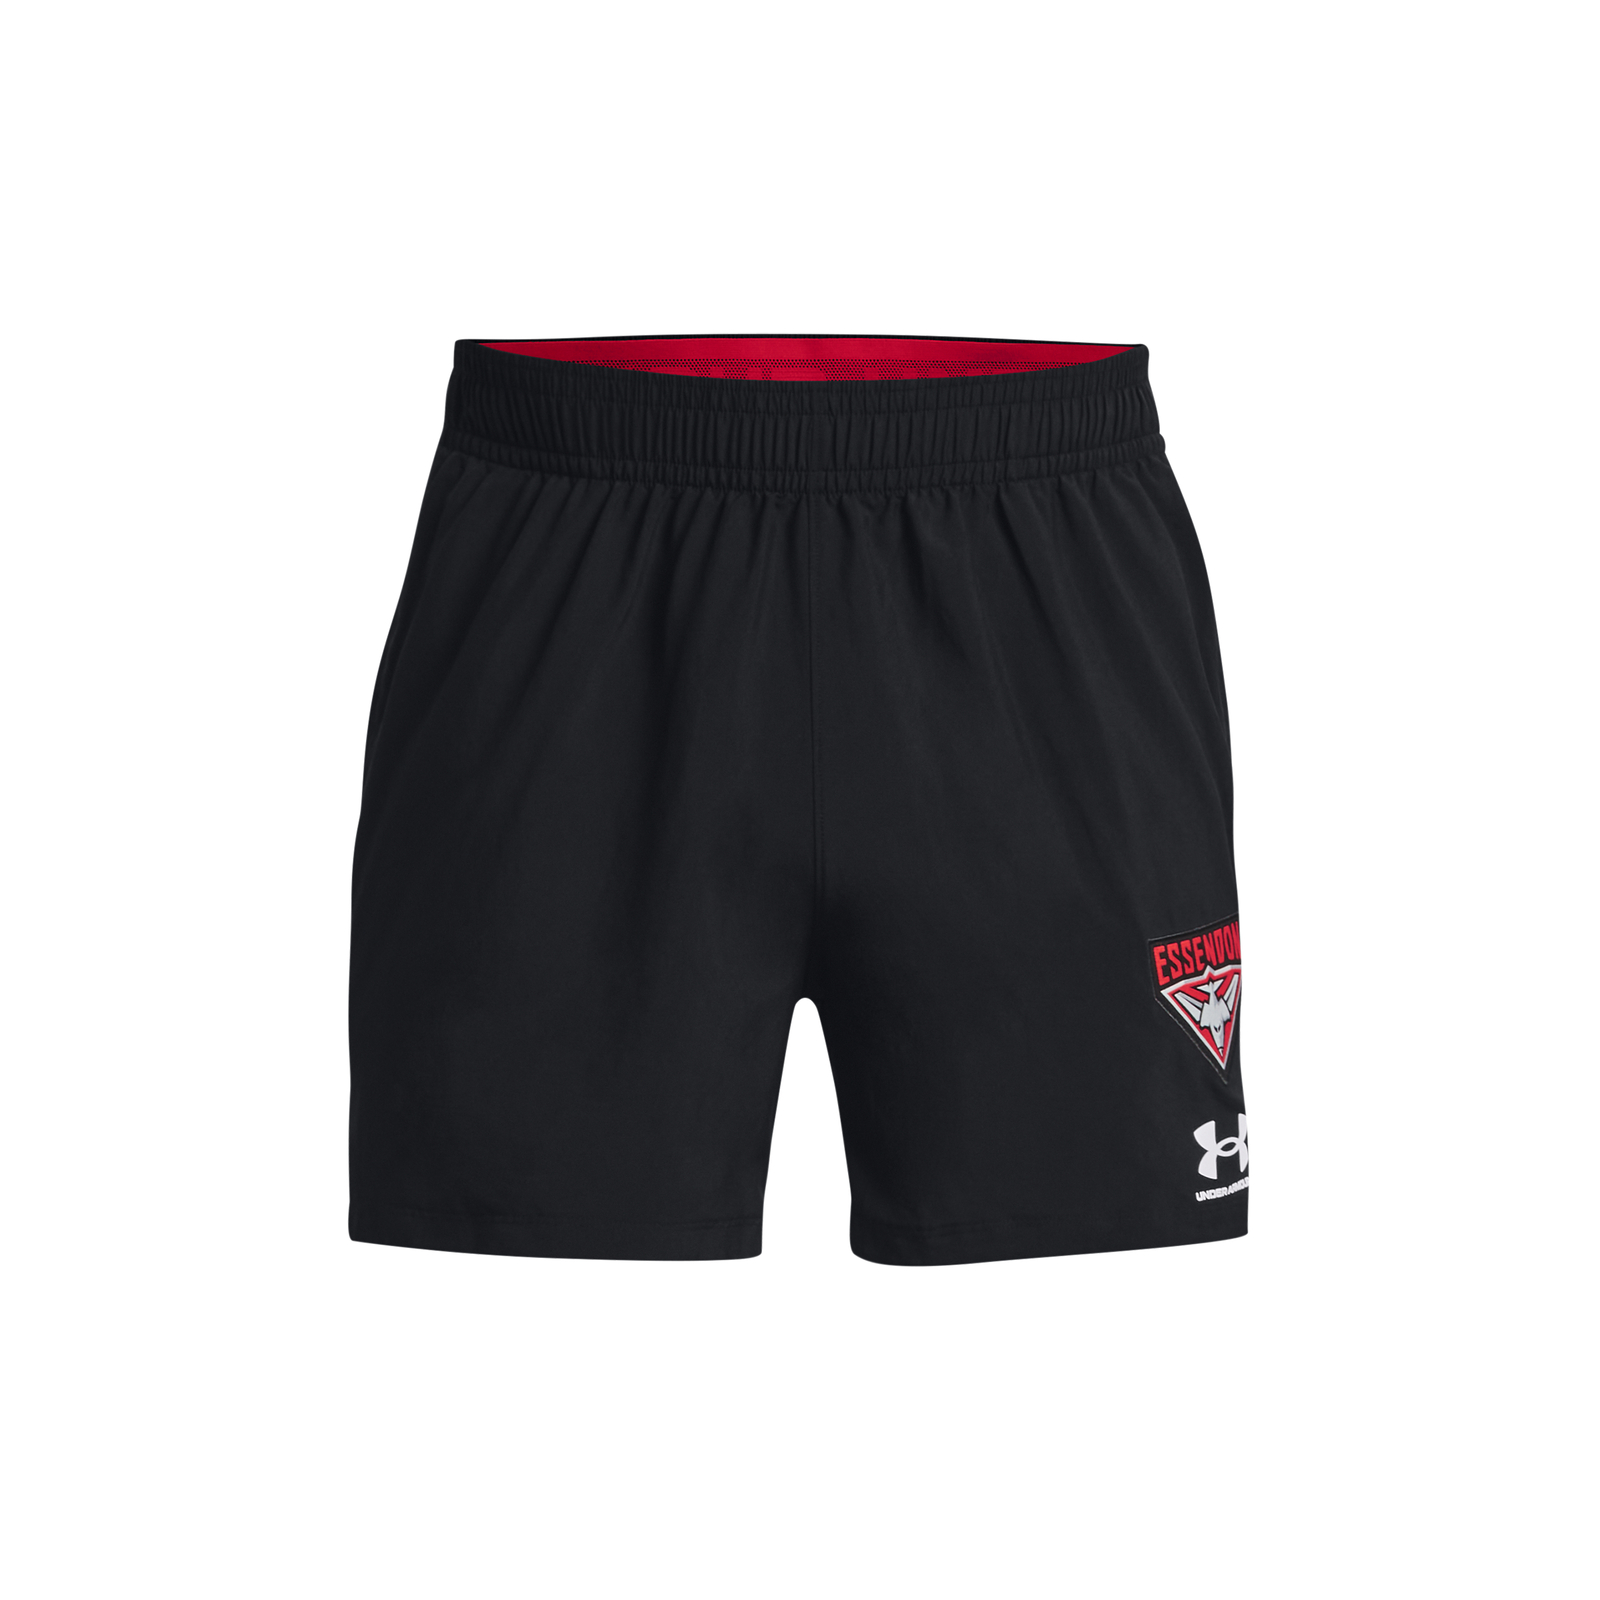 Essendon FC Mens Training Shorts 5 Inch